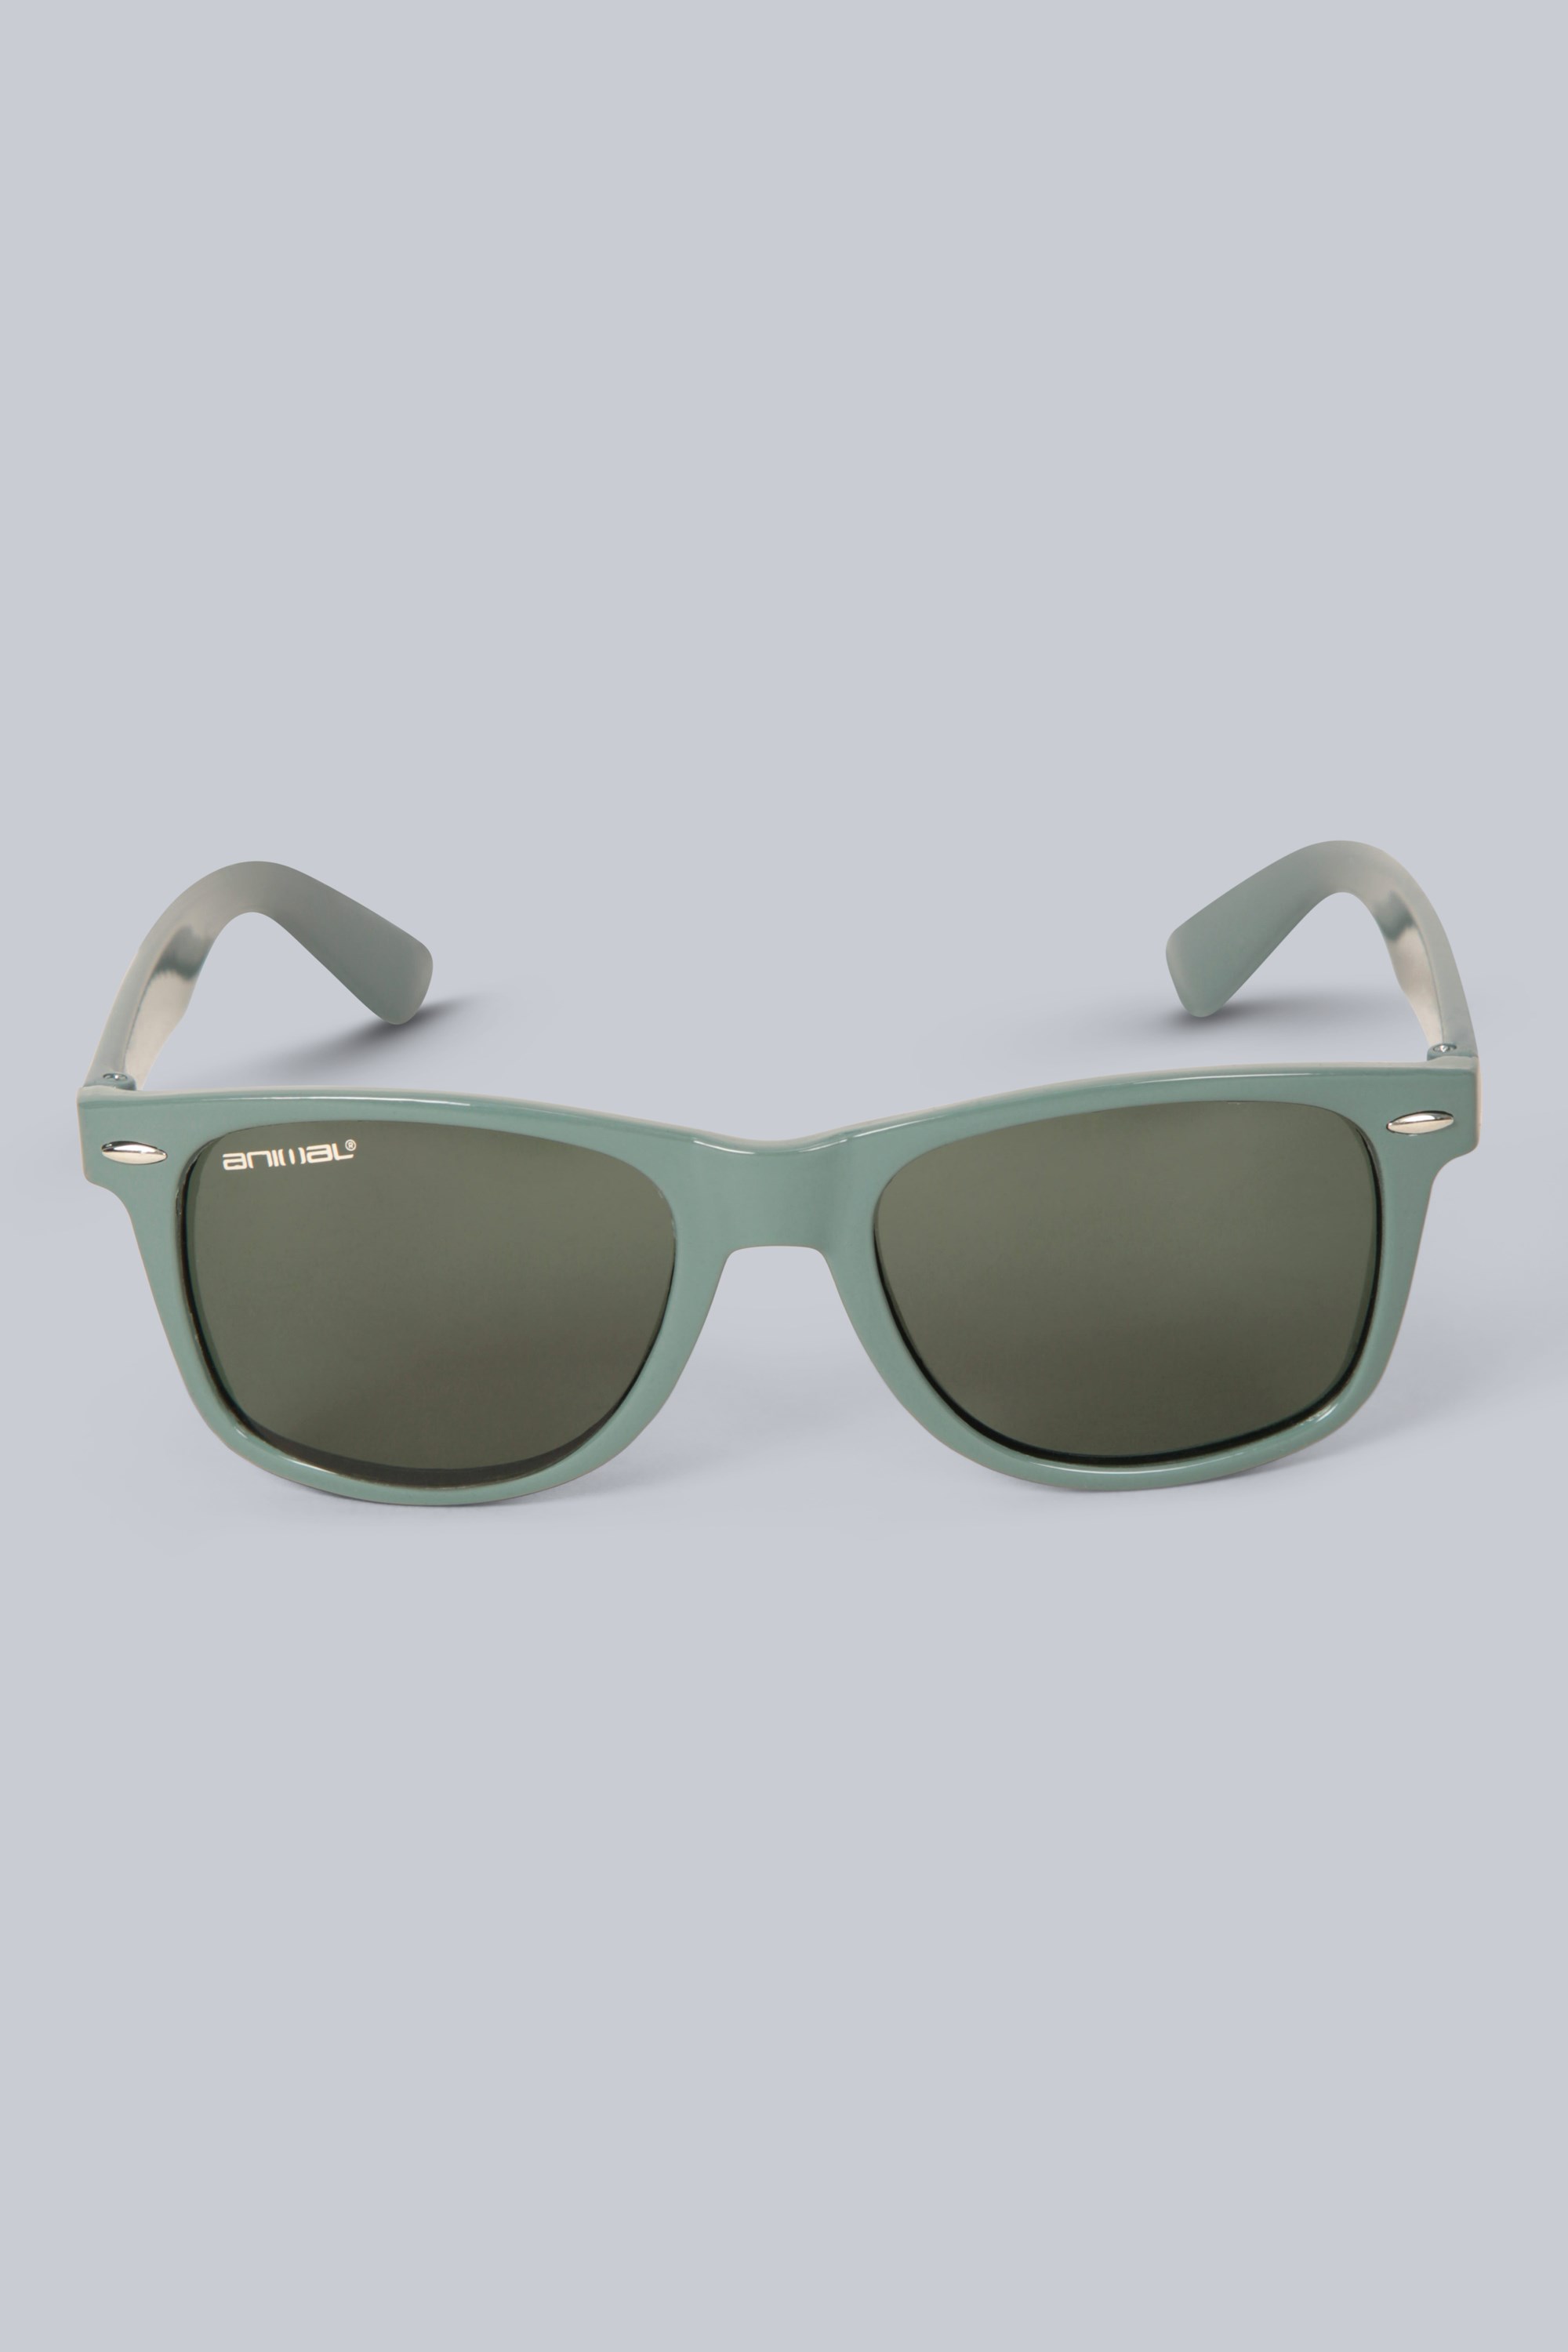 Ash Mens Recycled Polarised Sunglasses - Blue